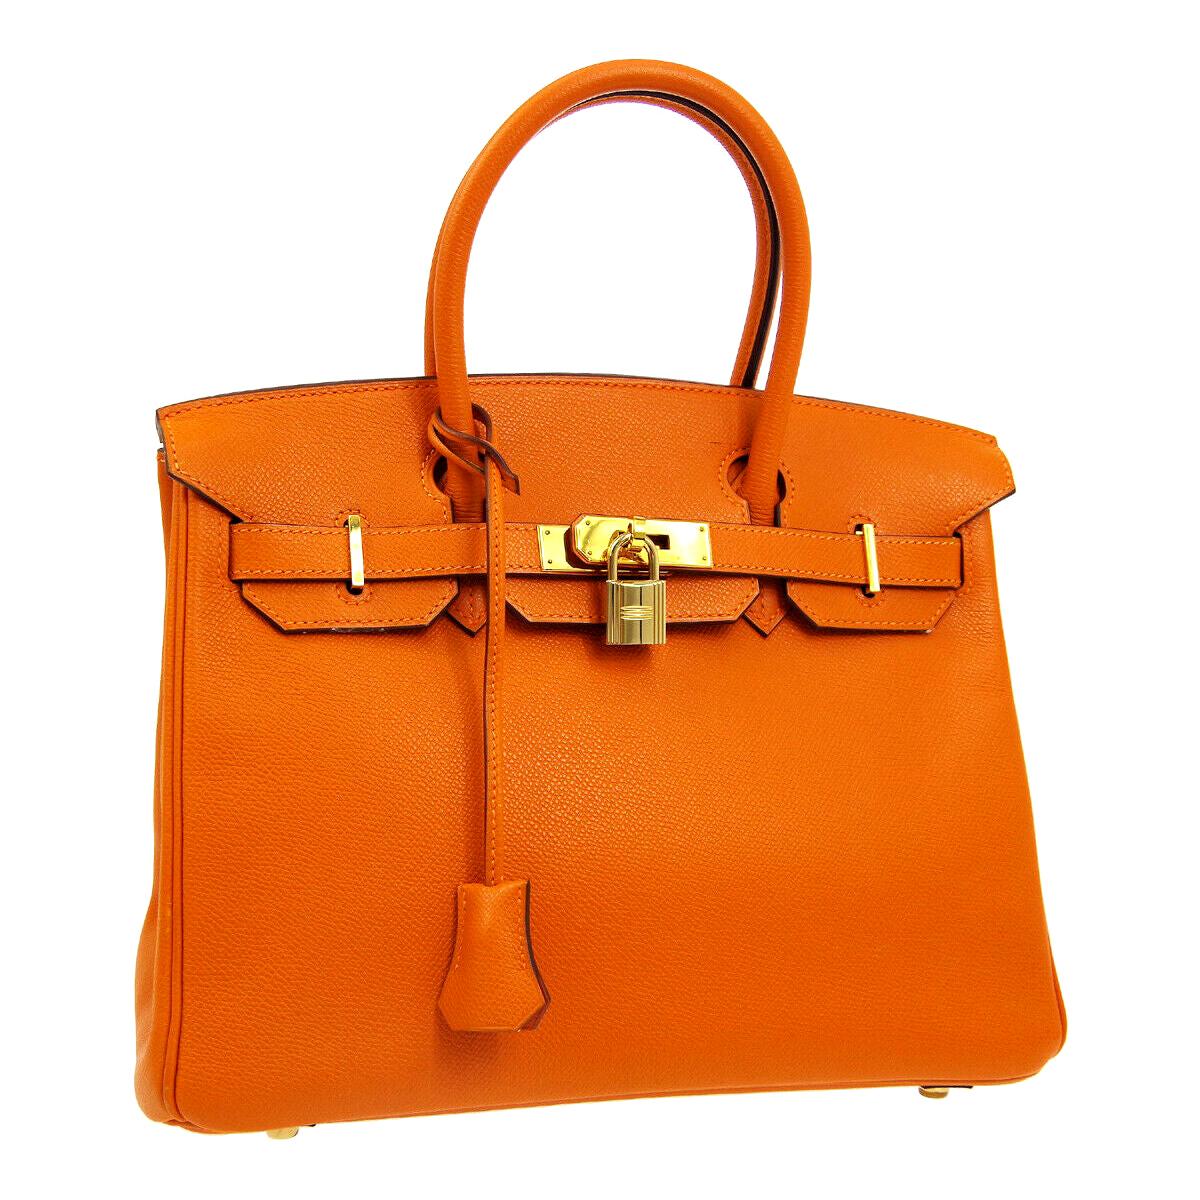 Hermes Birkin 30 Orange Leather Gold Top Handle Satchel Tote Bag 